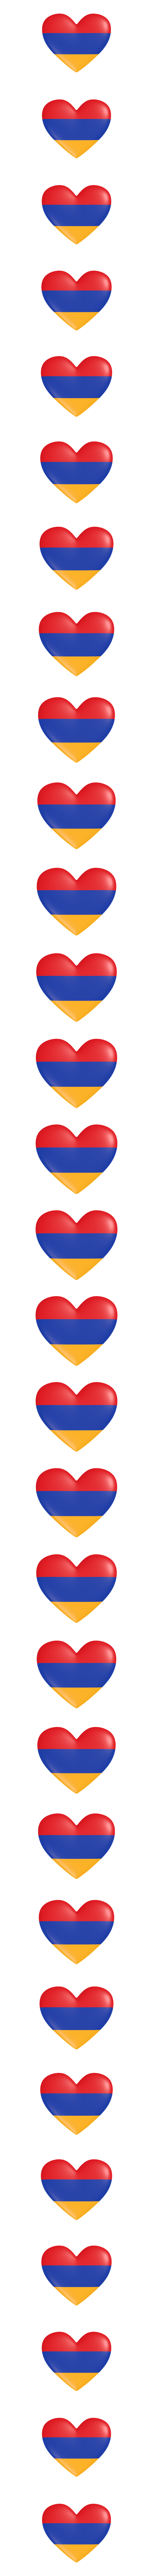 Armenia heart